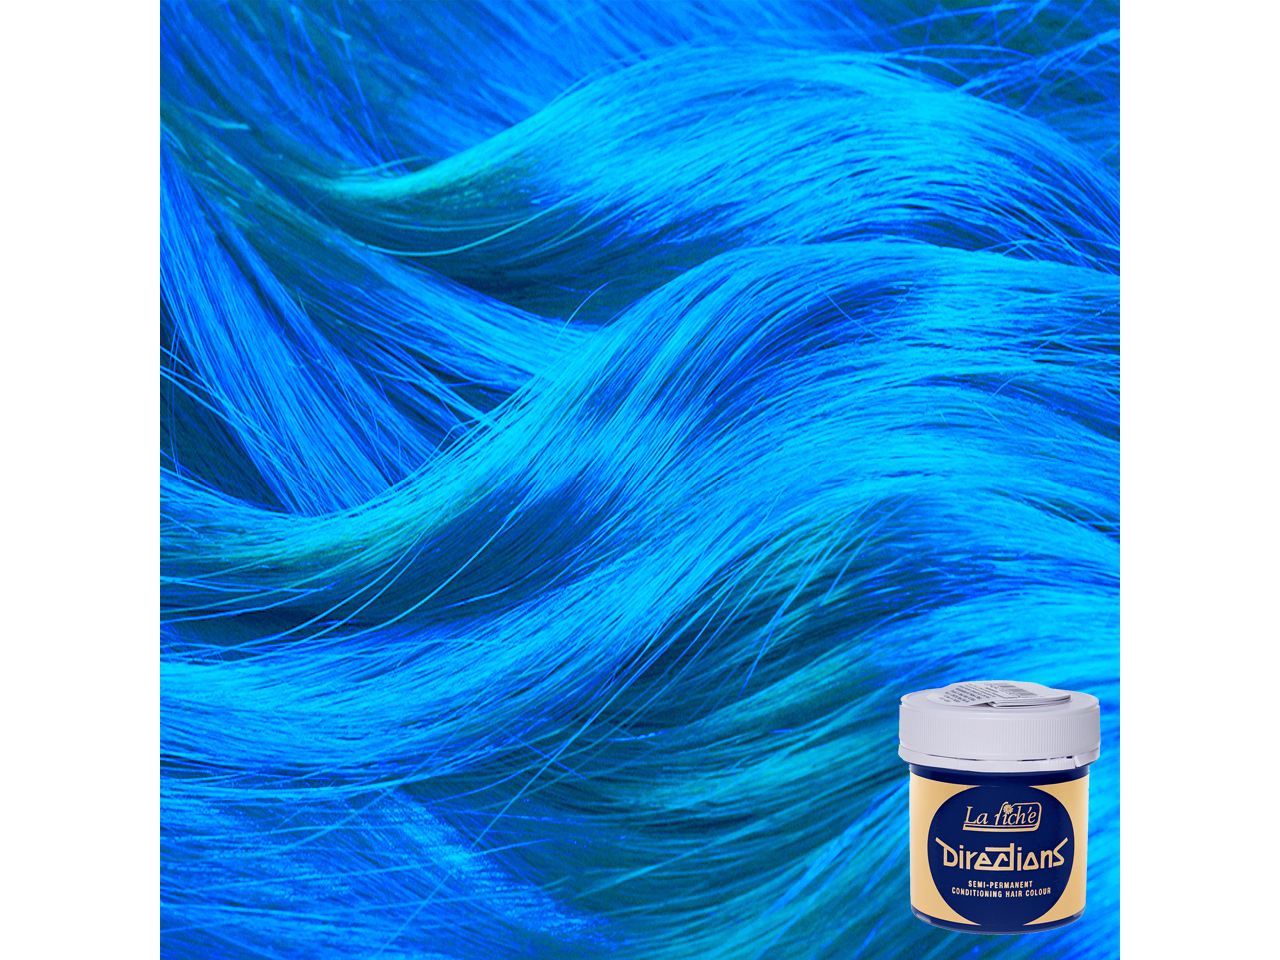 1. Blue Lagoon Directions Hair Dye - Arctic Fox - wide 6